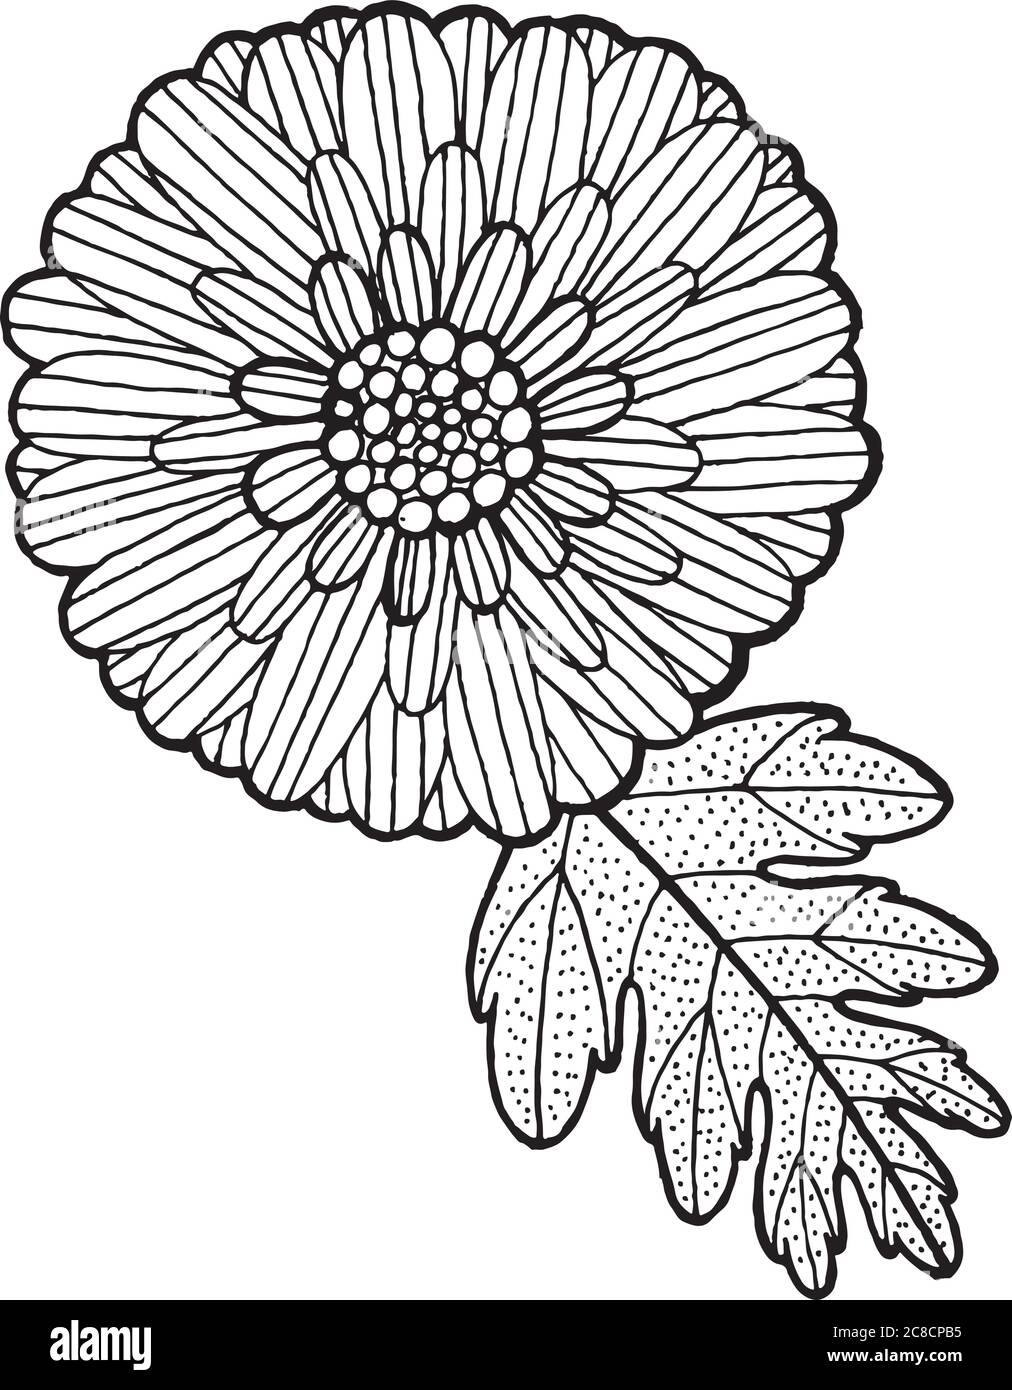 Hrysanthemum - Blume und Blatt. Isolierte Grafik. Vect Stock Vektor